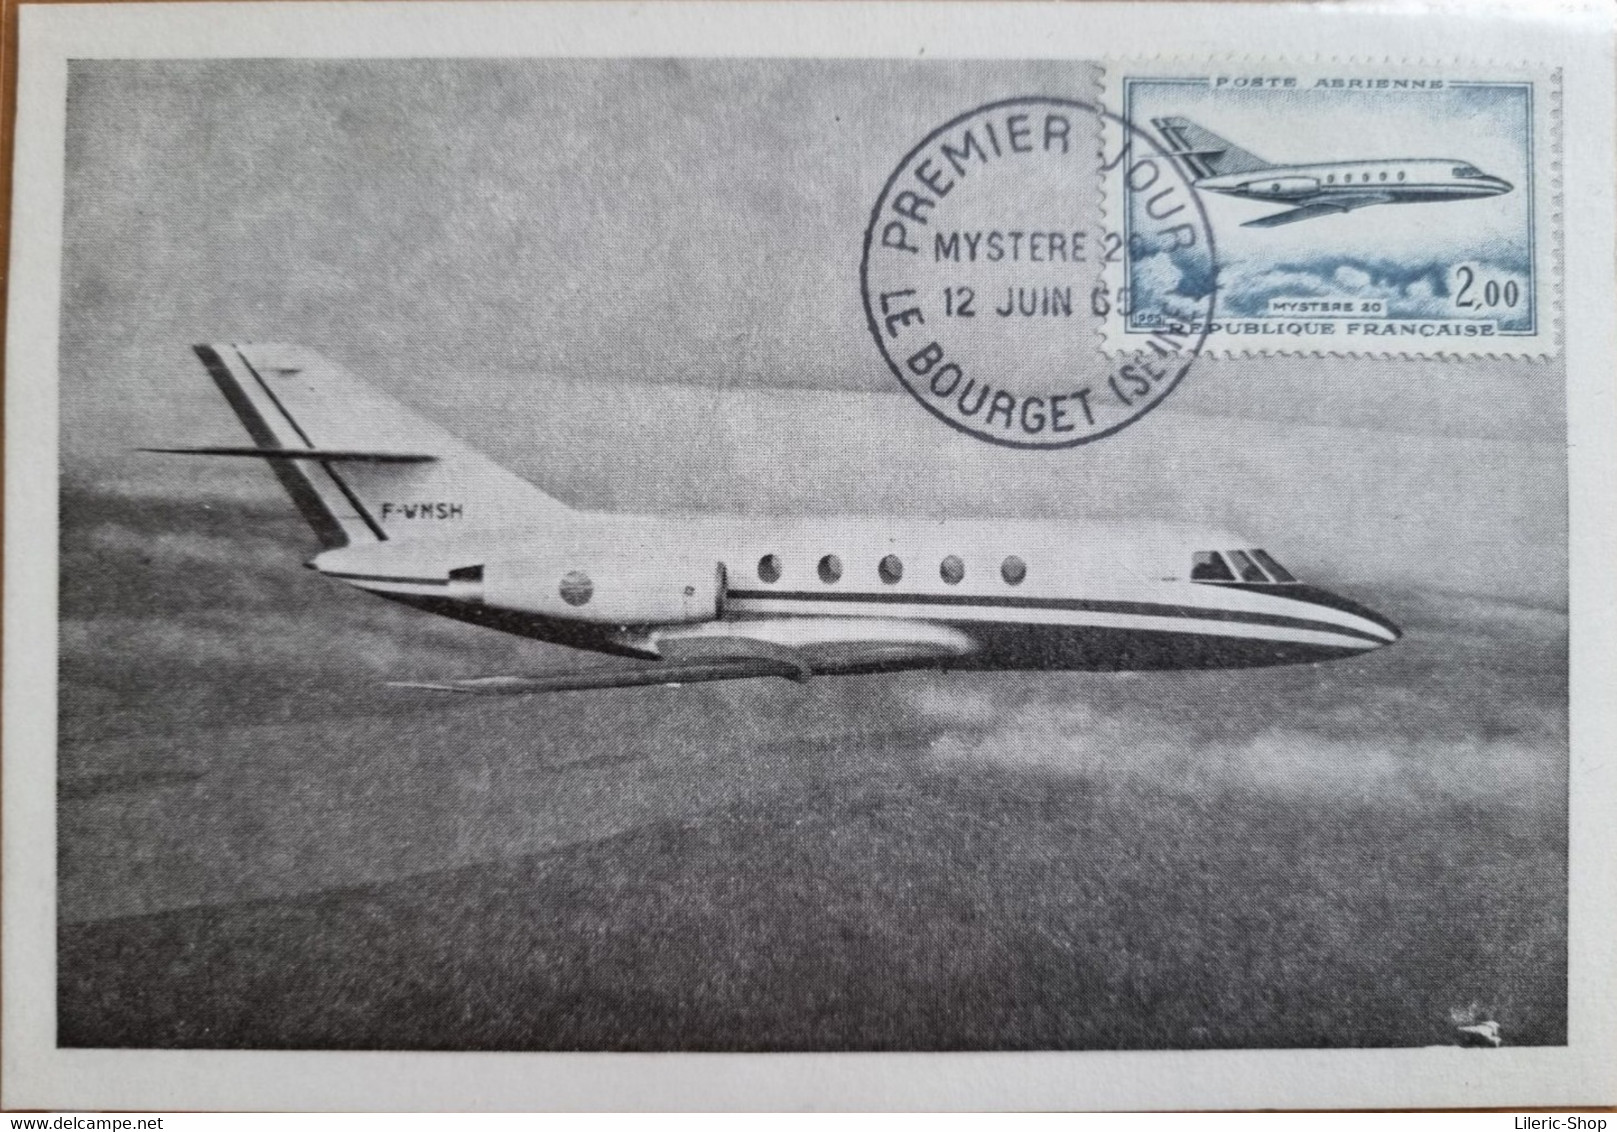 CARTE POSTALE PREMIER JOUR 12 06 1965 G.A.M. DASSAULT - Sud Aviation - "Mystère 20" Fan Jet Facon - - 1946-....: Era Moderna